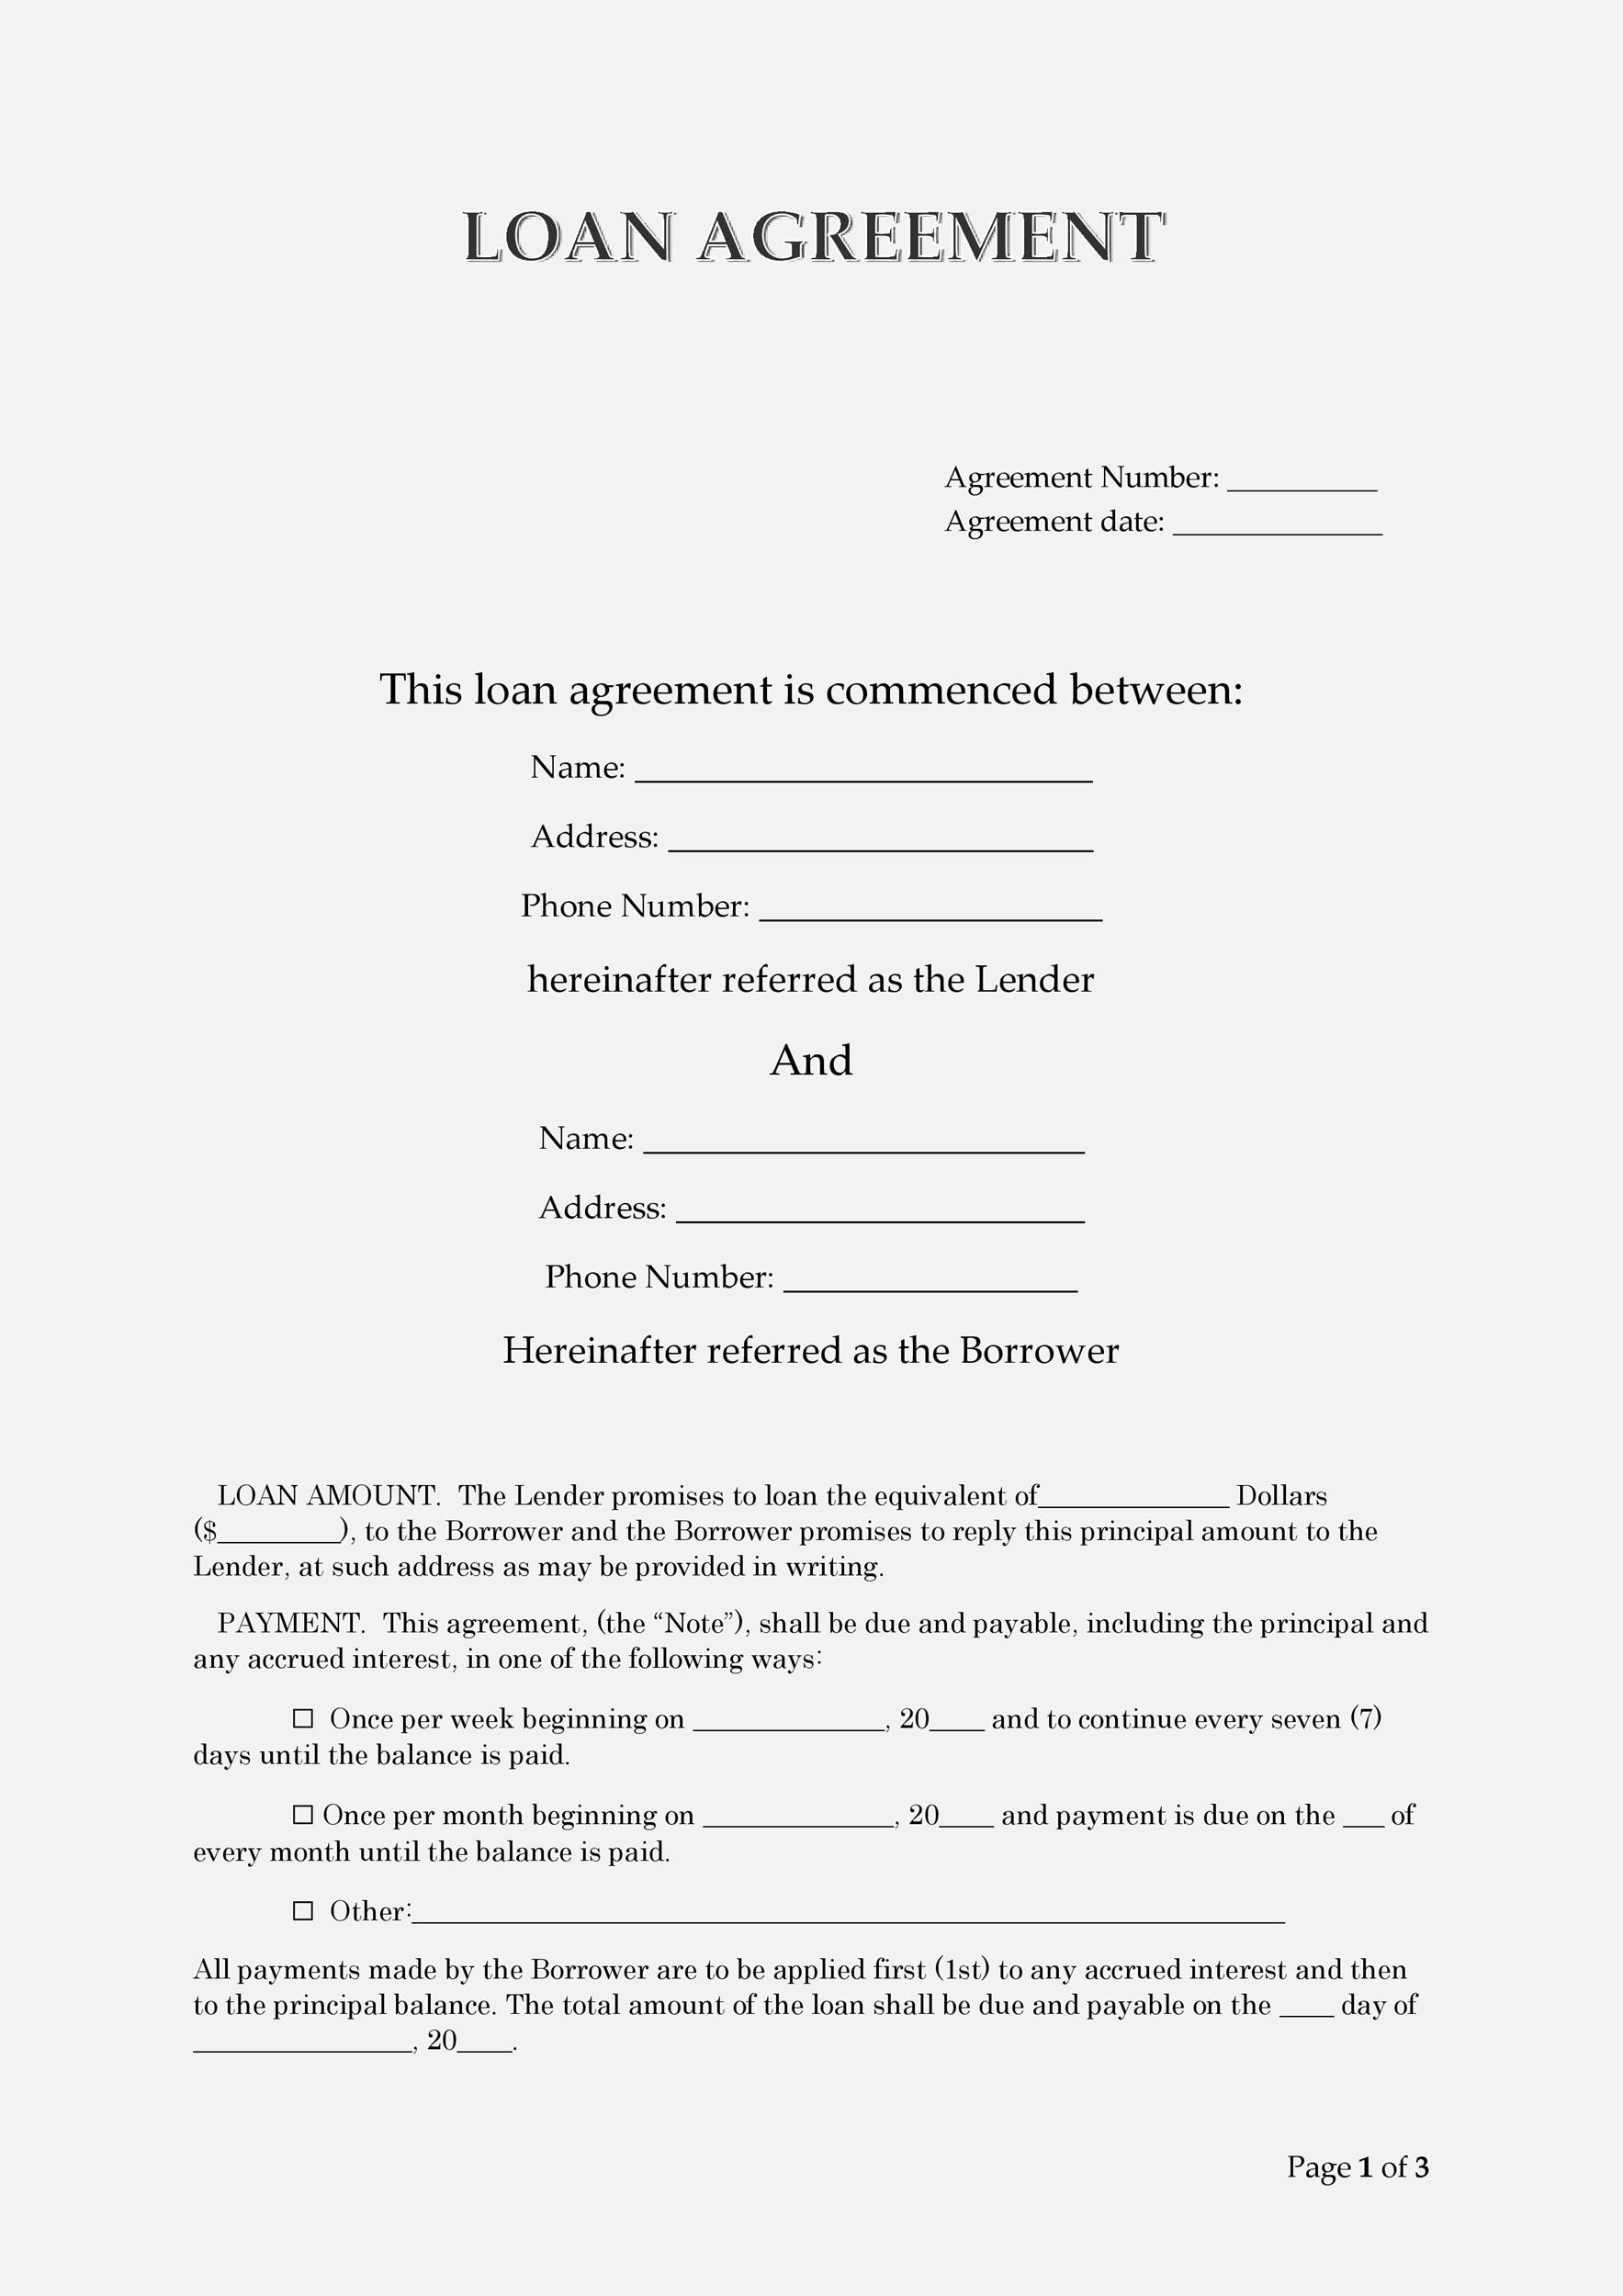 40+ Free Loan Agreement Templates [Word & PDF] ᐅ TemplateLab